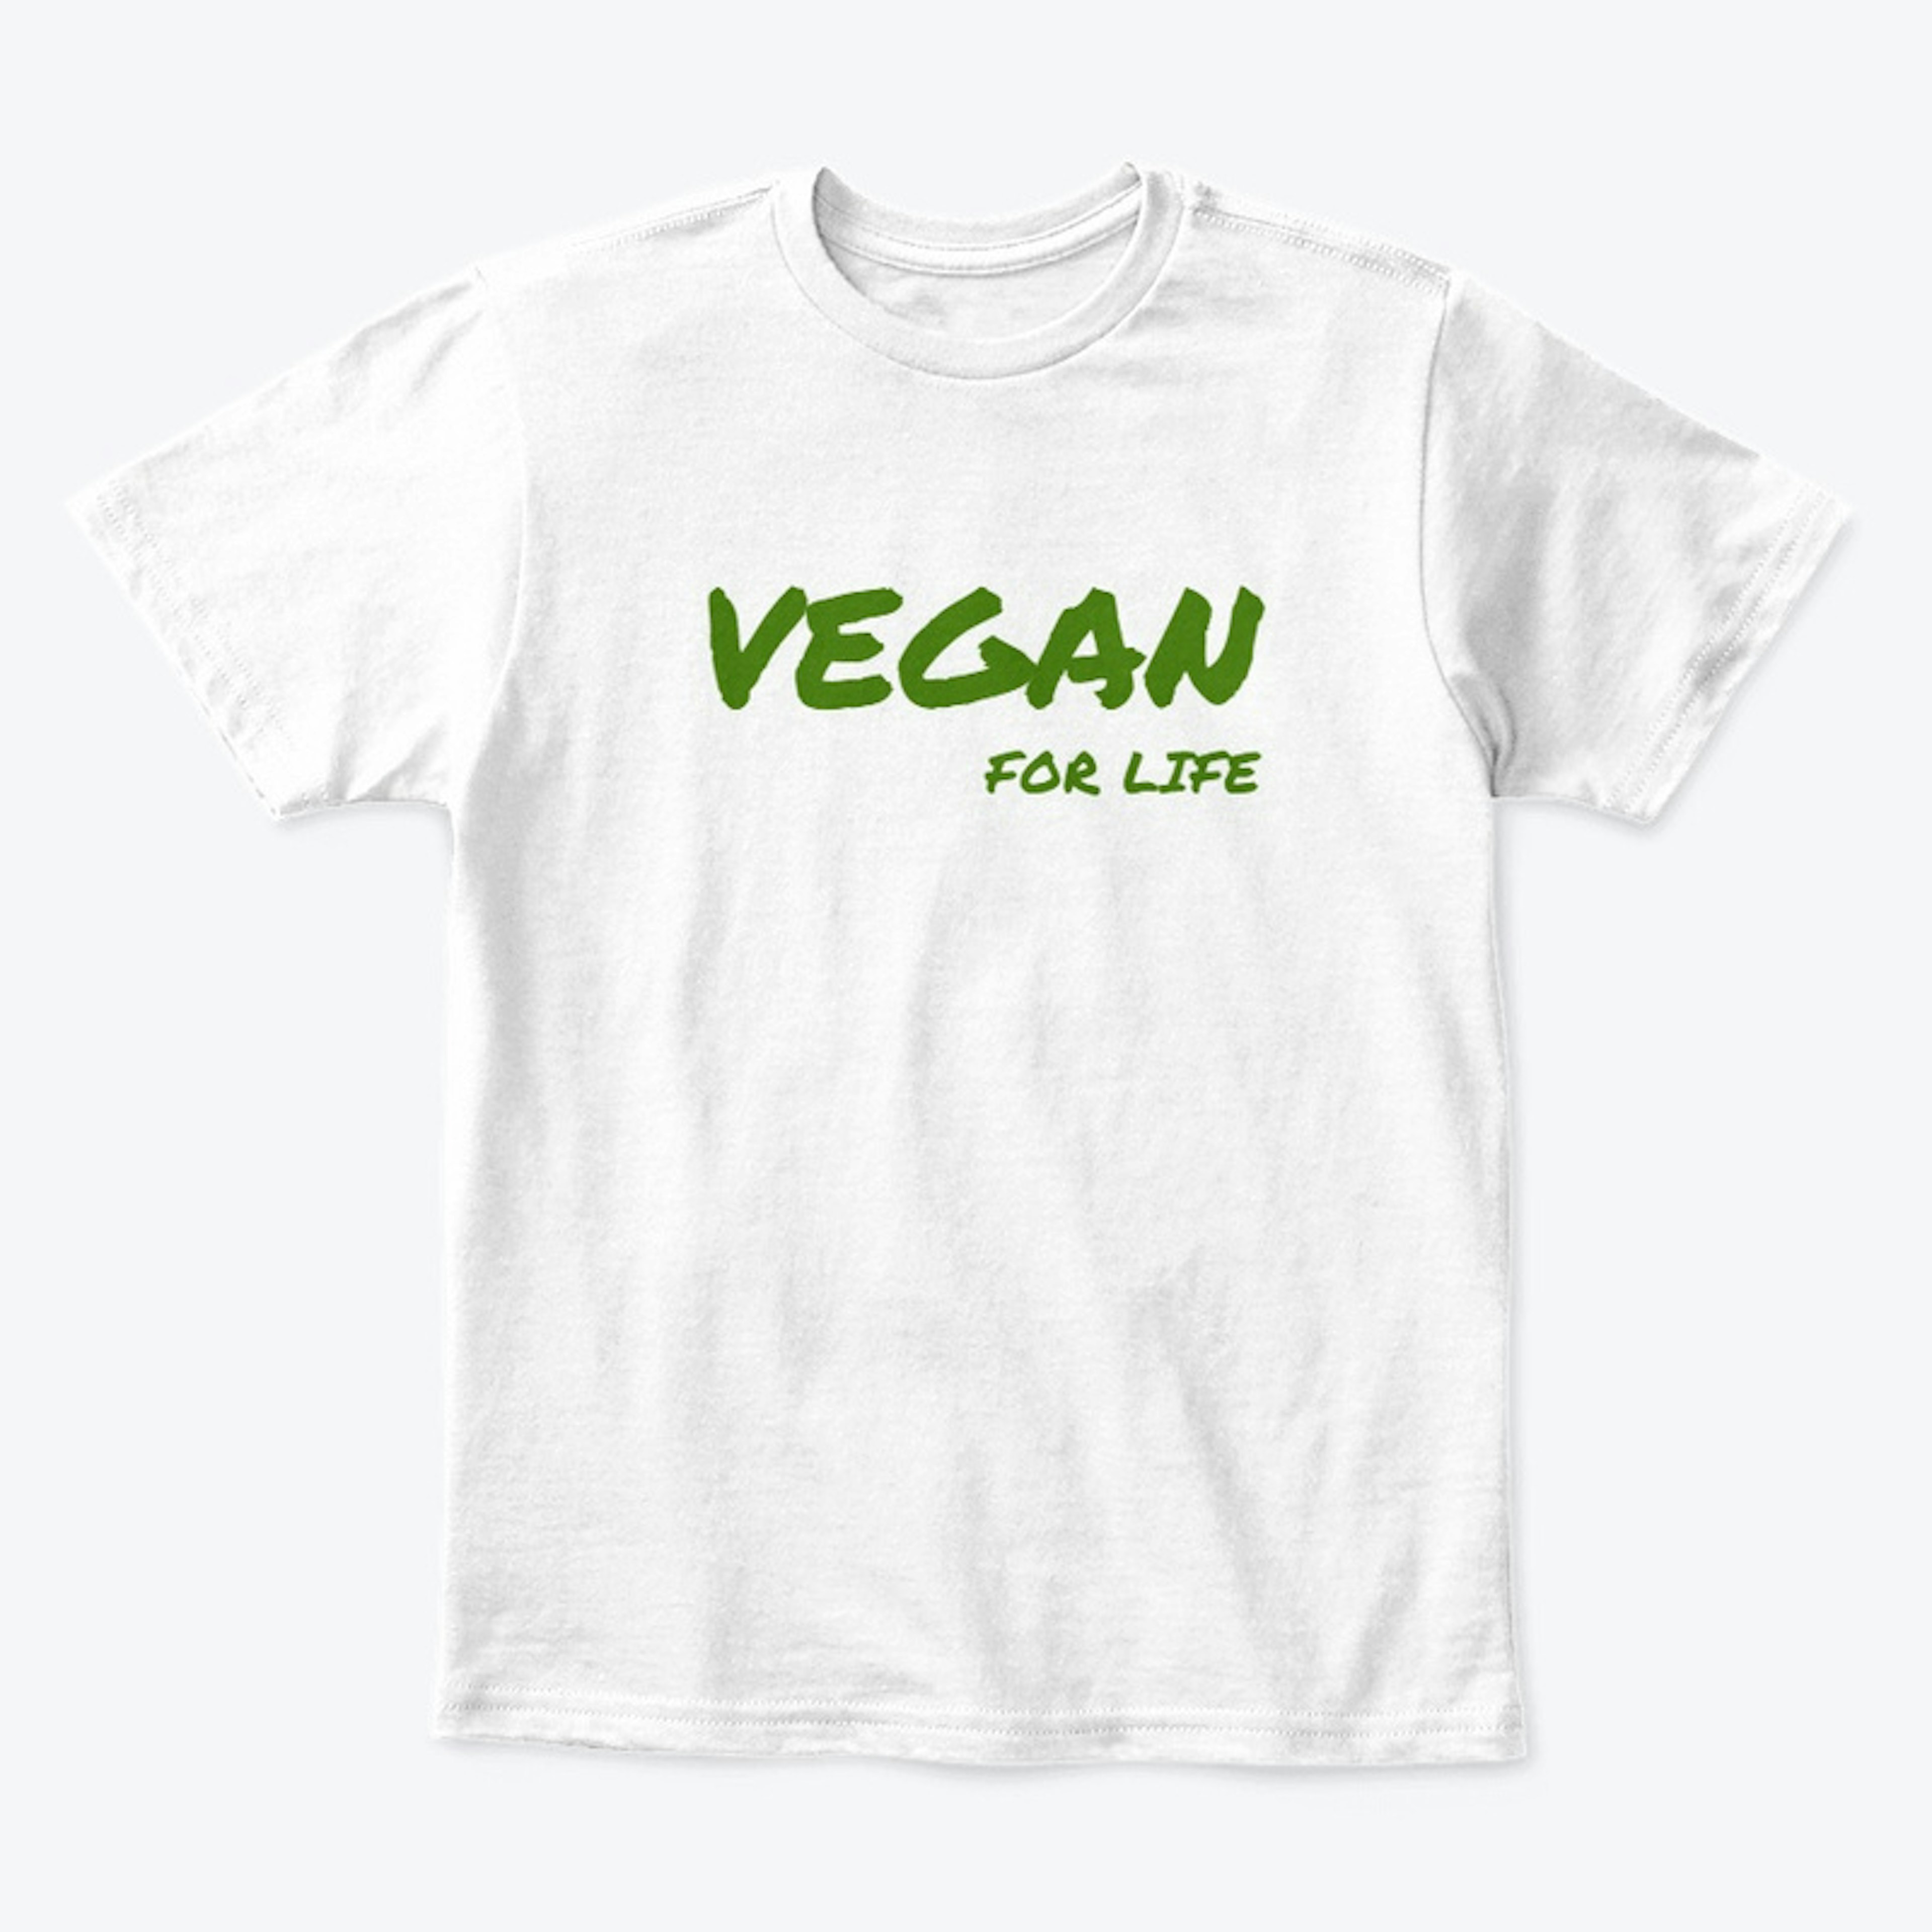 Vegan For Life!